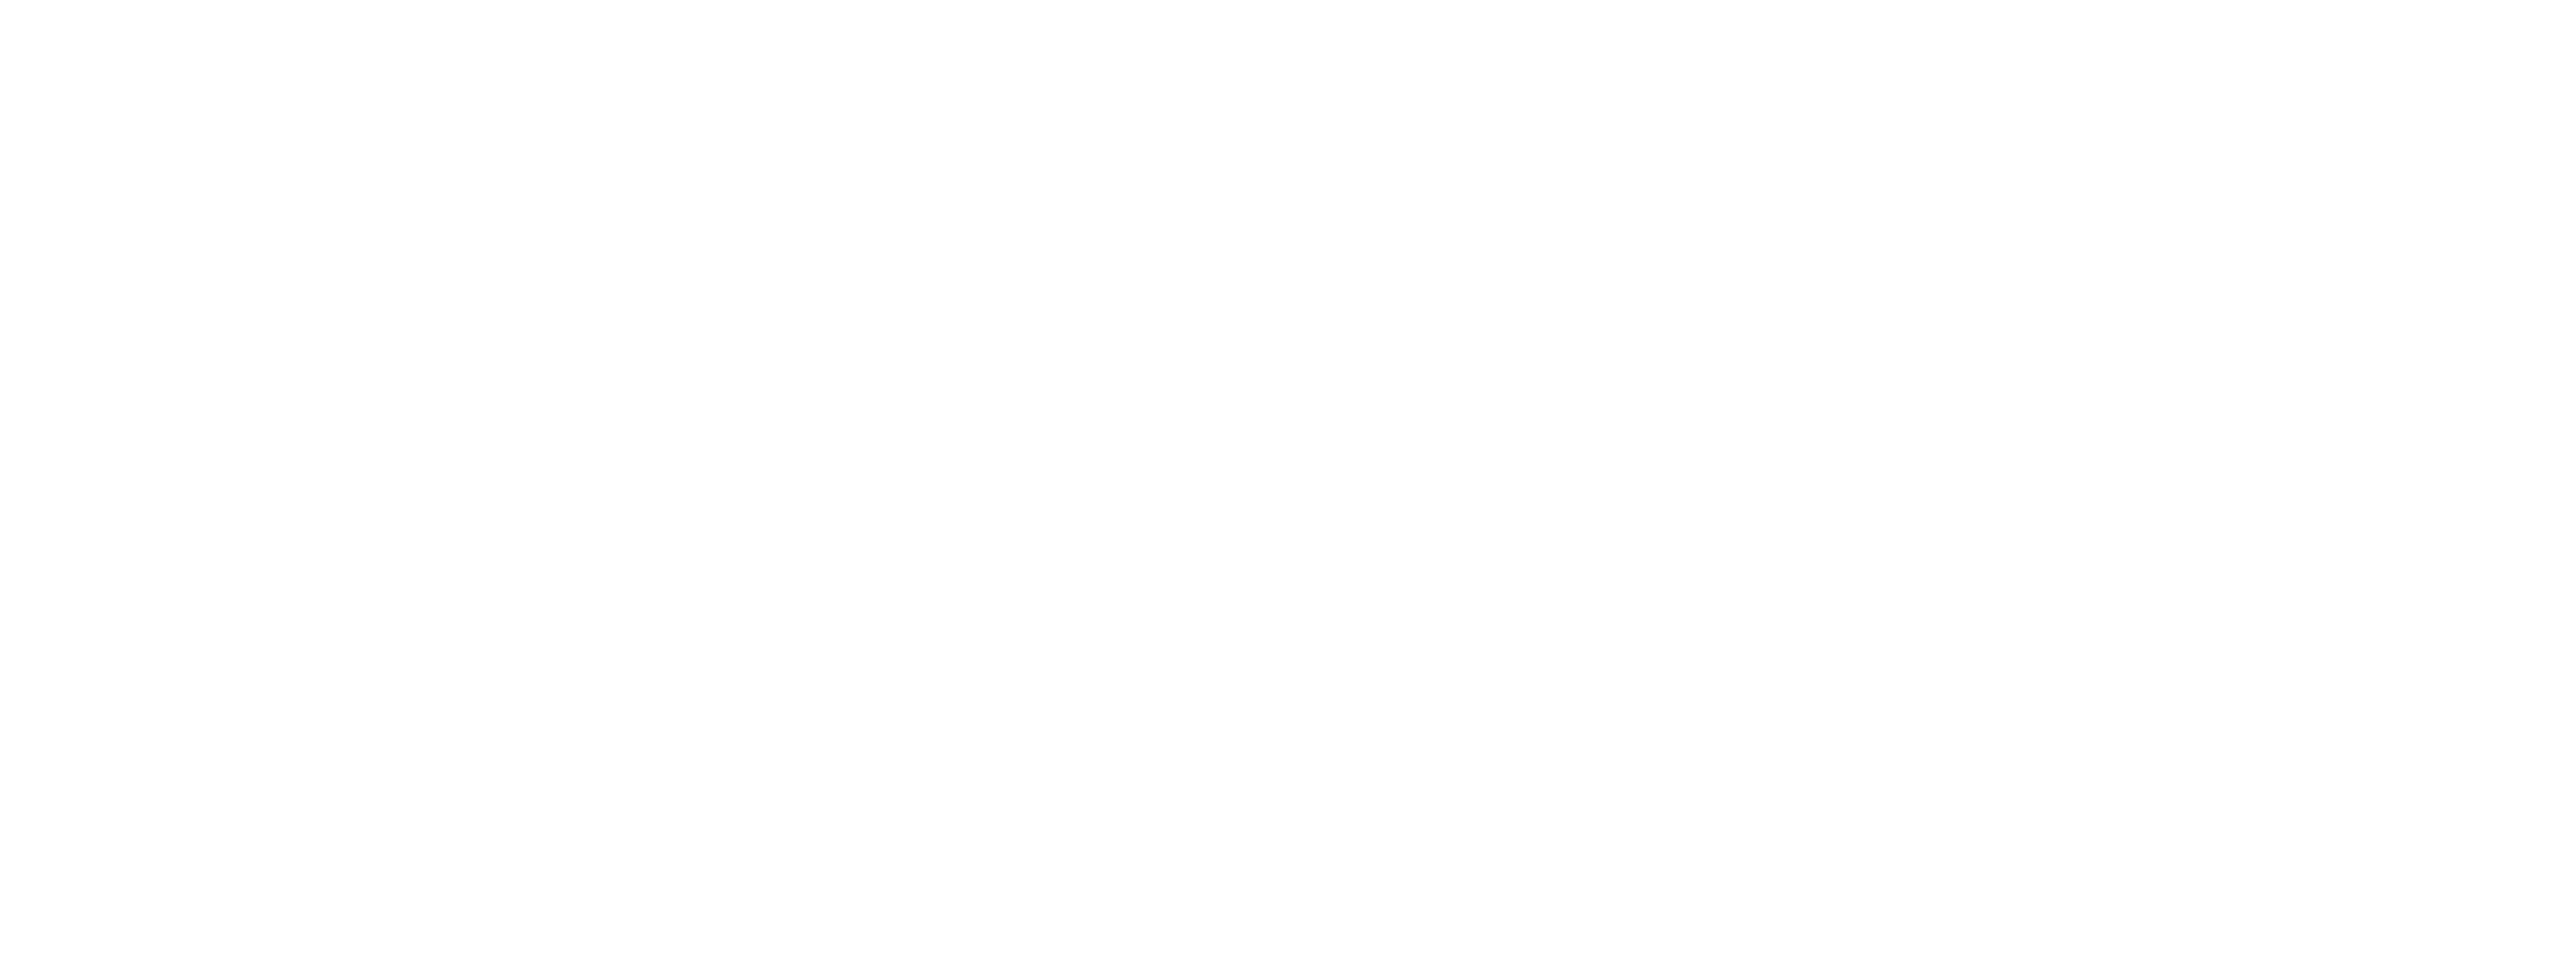 Champagne Jazz Series - Logo white